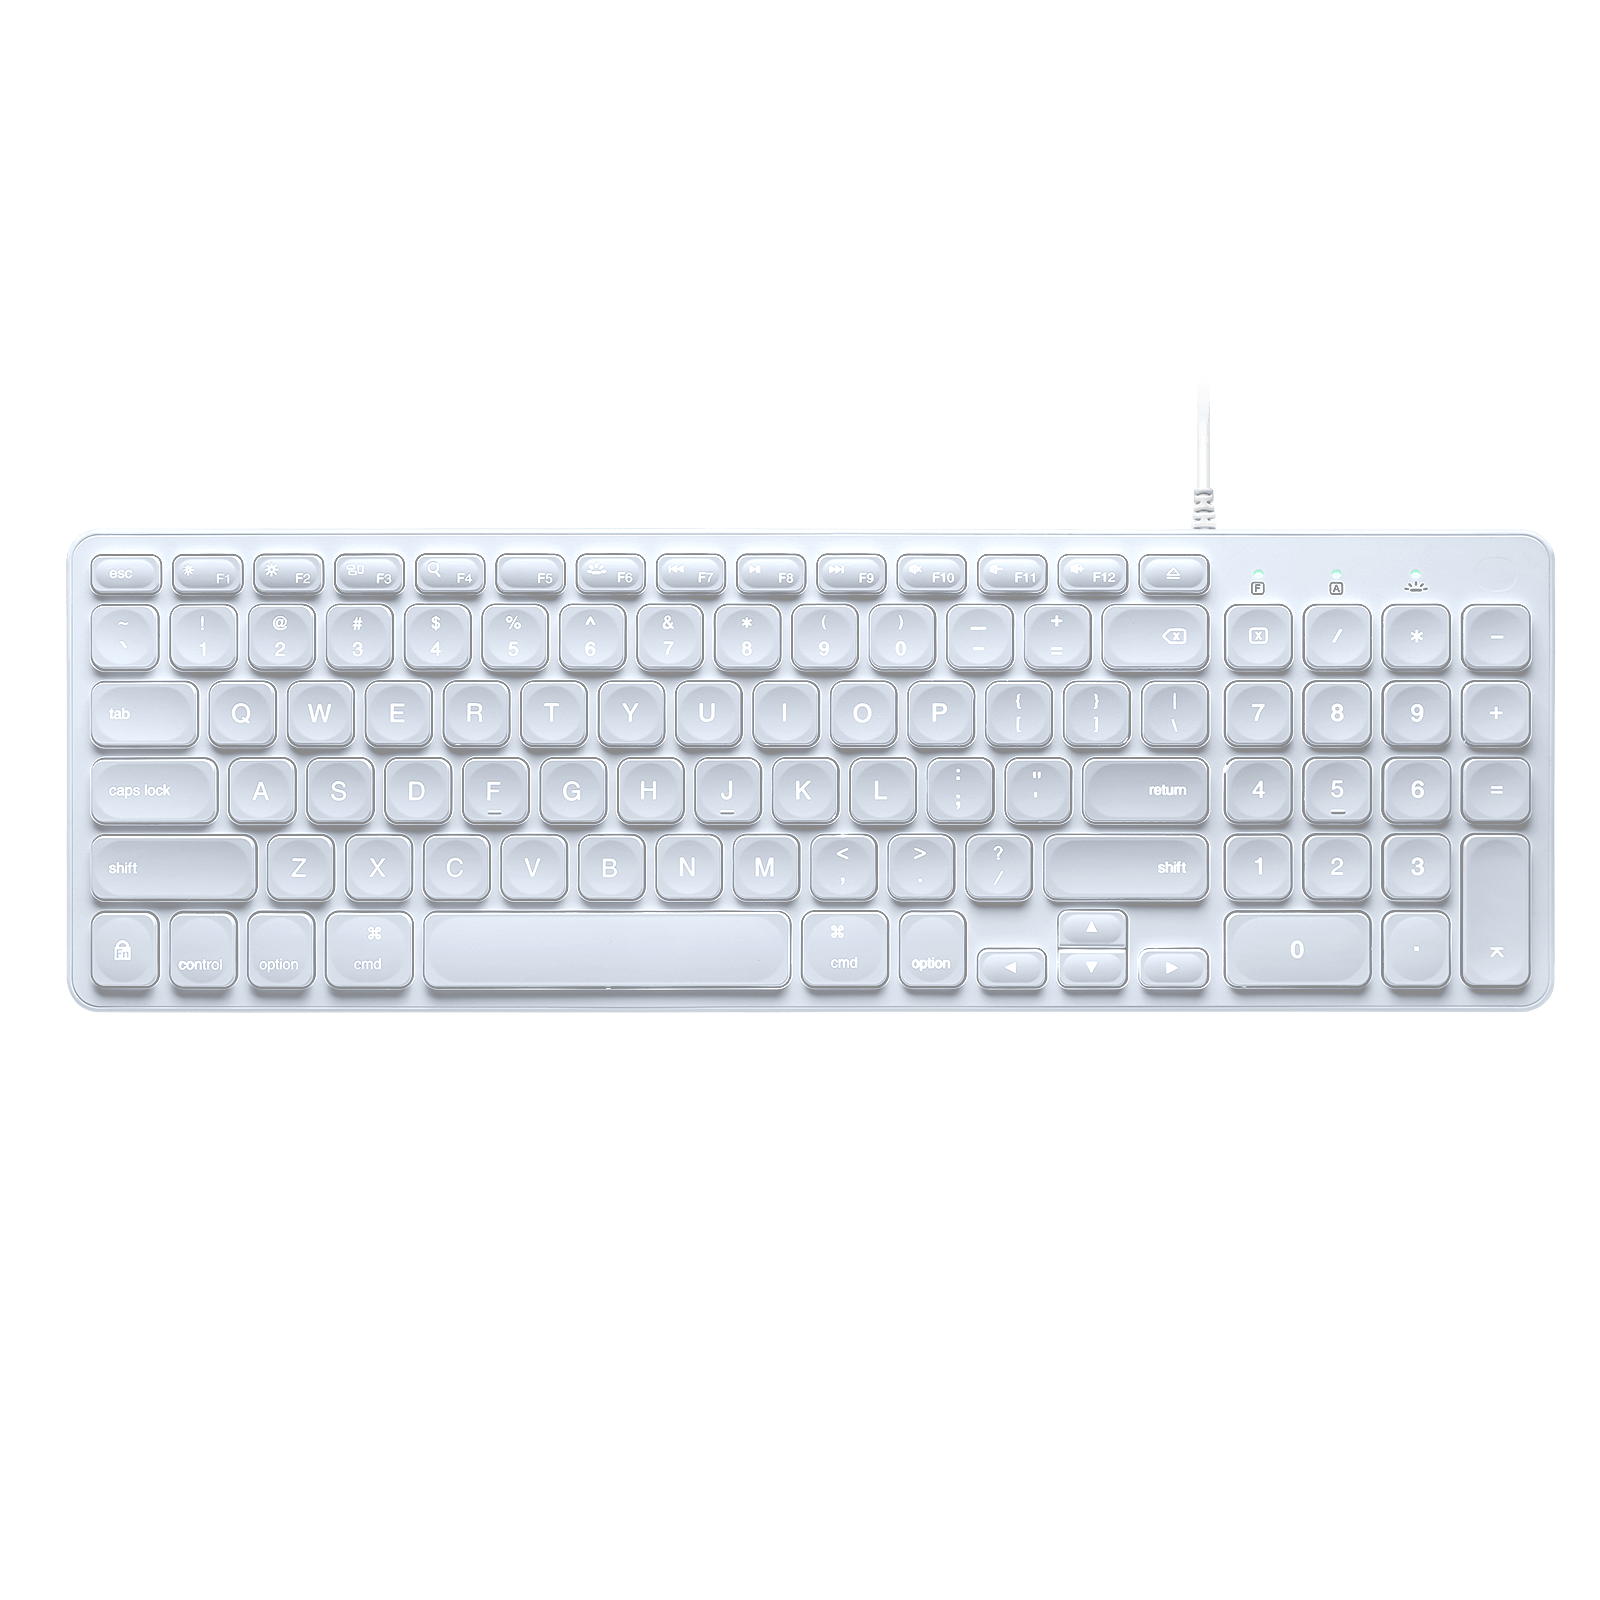 PERIBOARD-333M - Wired Compact Backlit Scissor Keyboard for Mac - Perixx Europe